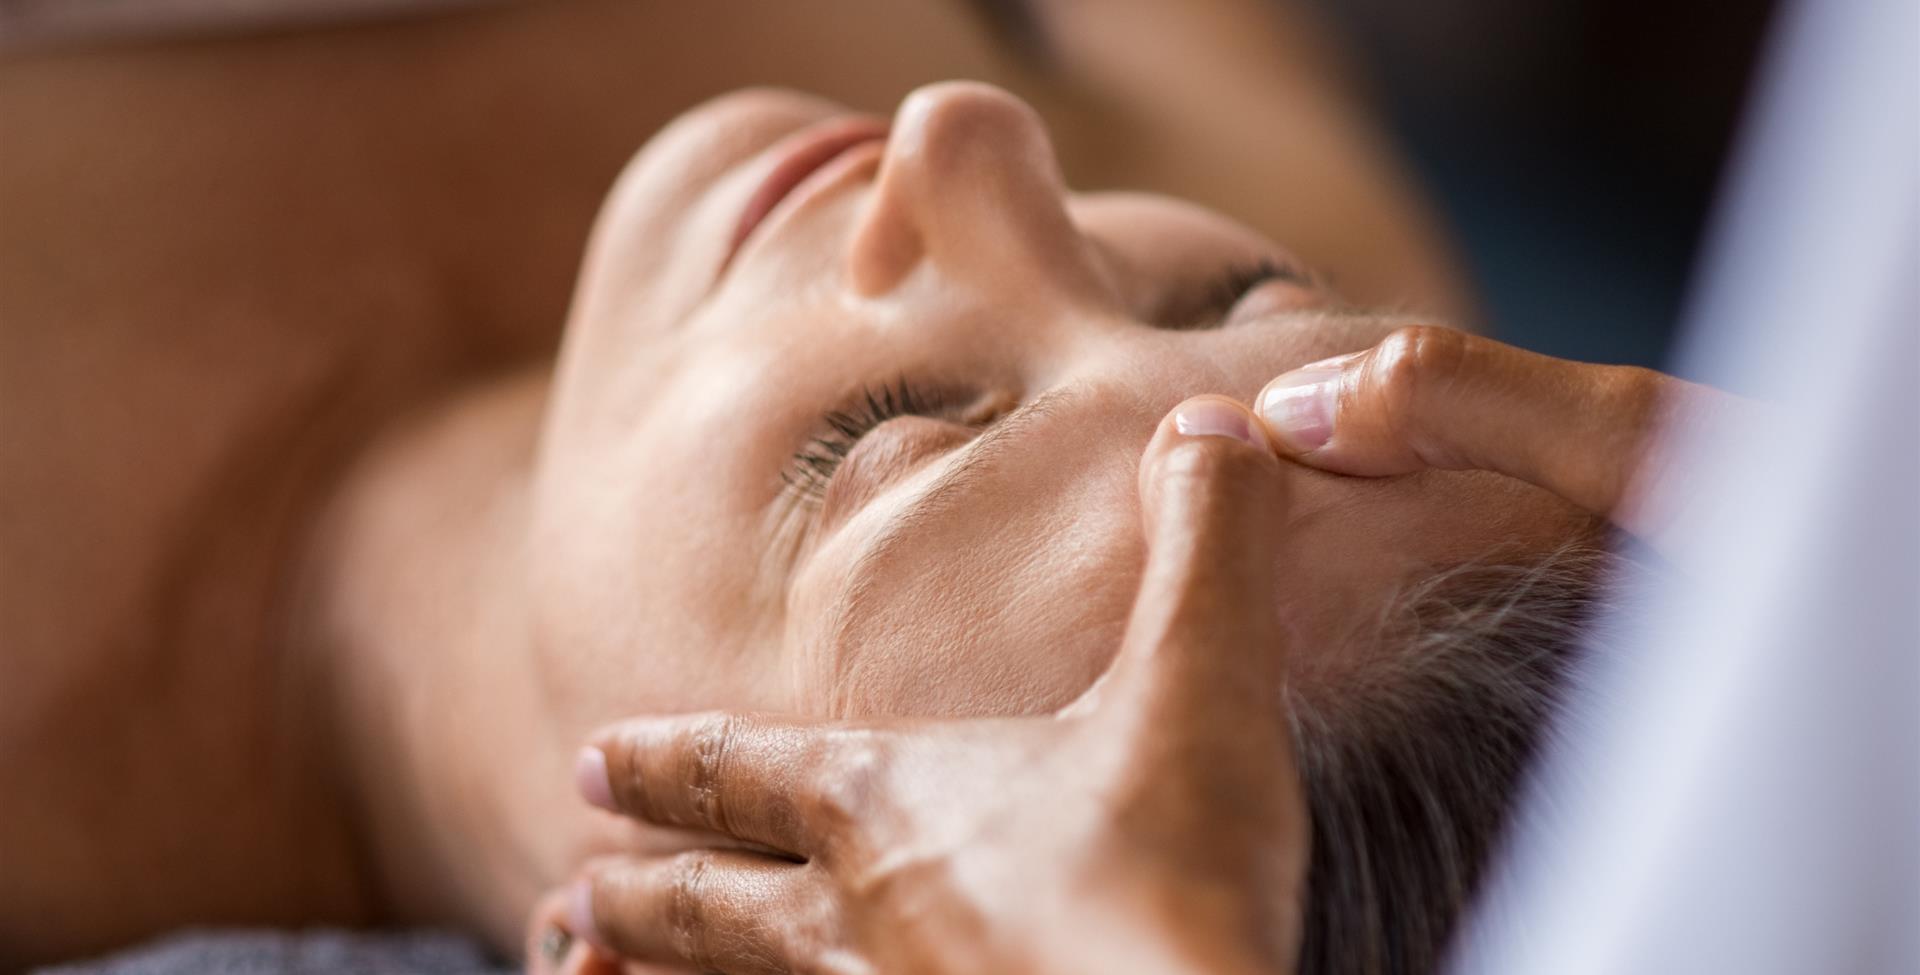 Woman getting face massaged